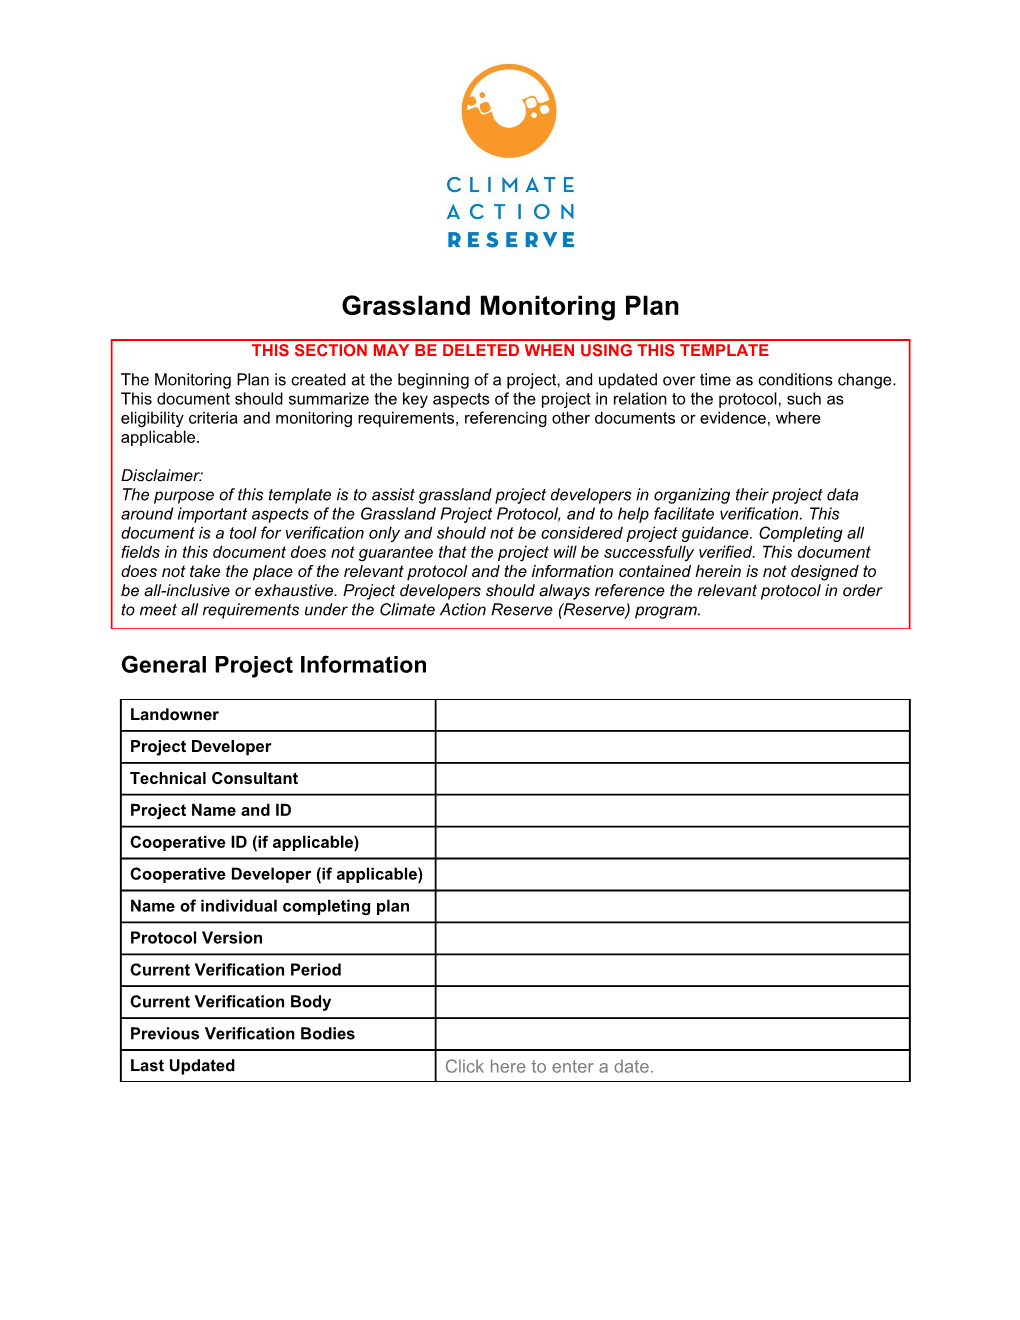 Grassland Monitoring Plan Templateapril 2016